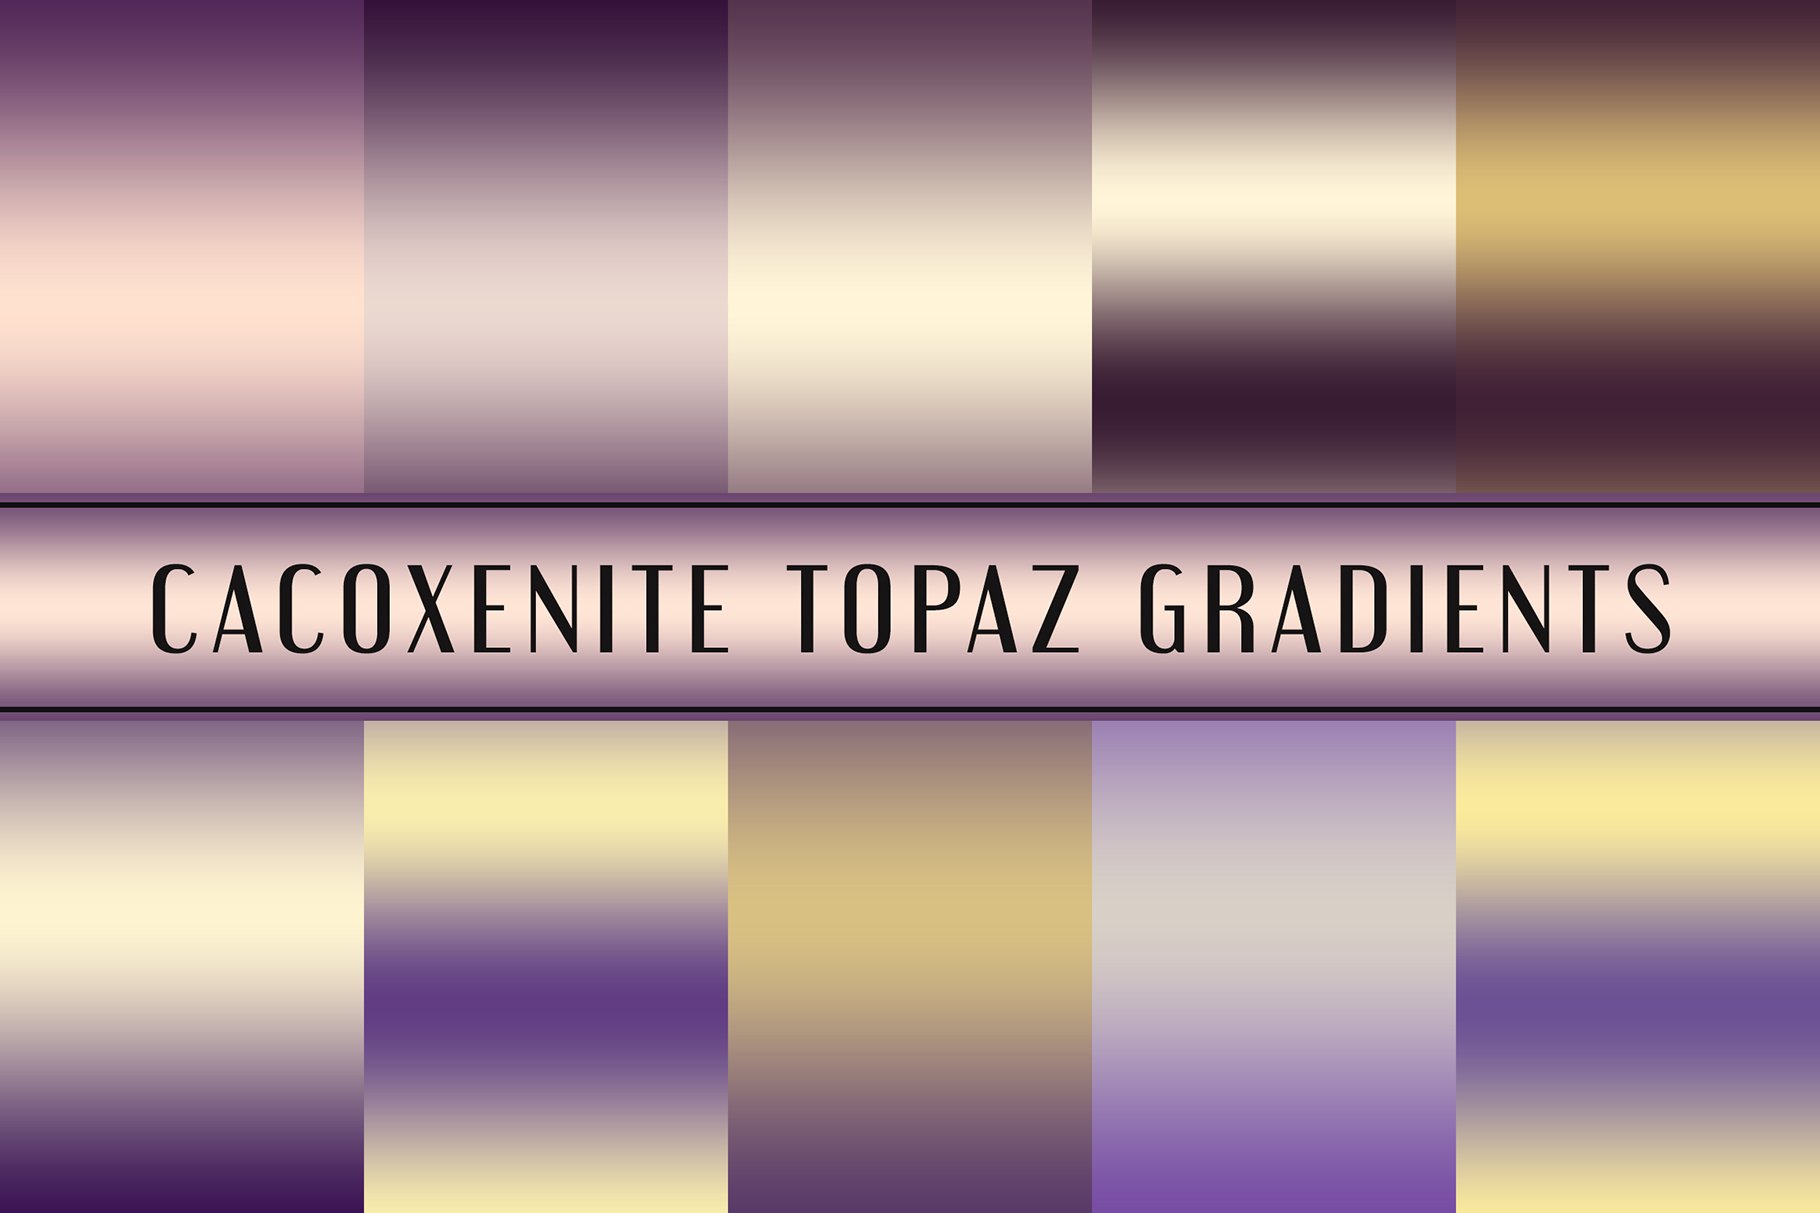 Cacoxenite Topaz Gradients cover image.